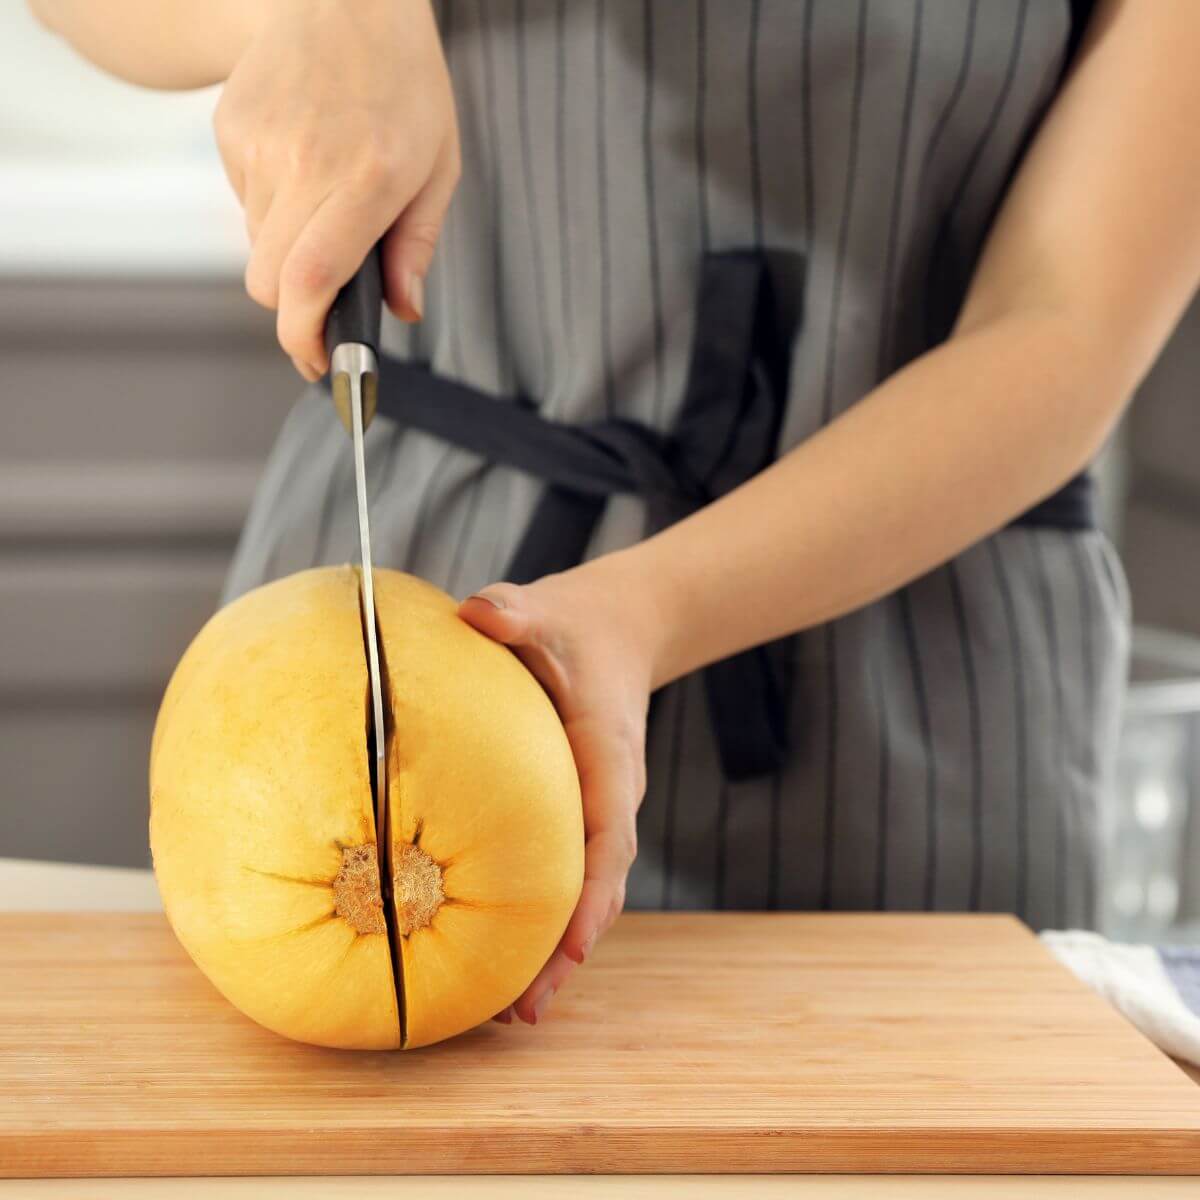 Step one in how to cut a spaghetti squash. Using a knife to cut a squash.